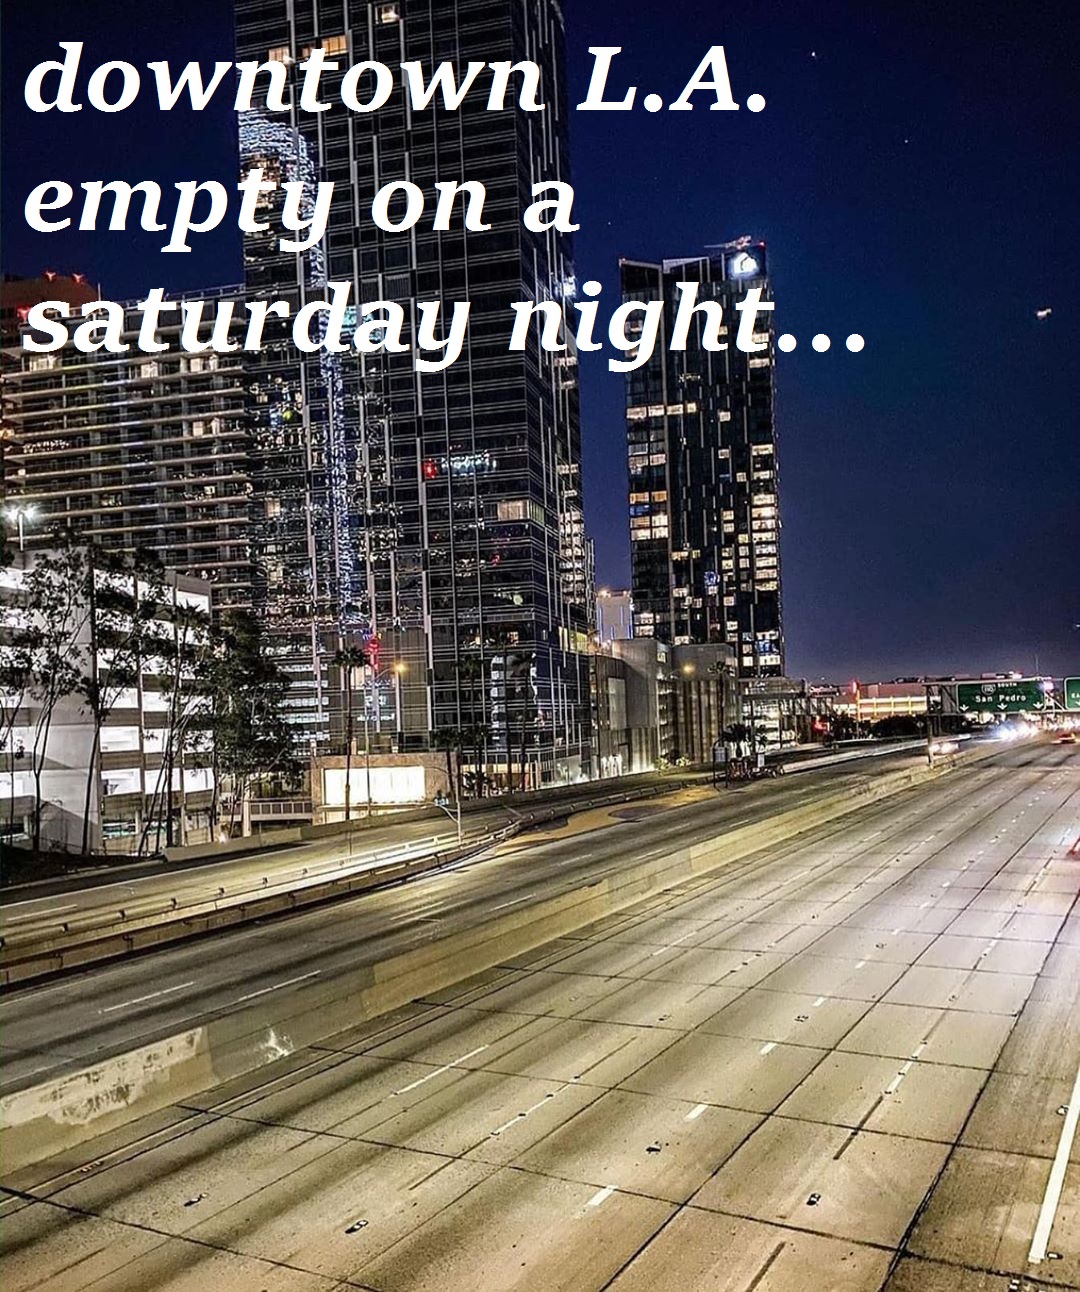 metropolis - downtown L.A. empty on a saturday night...